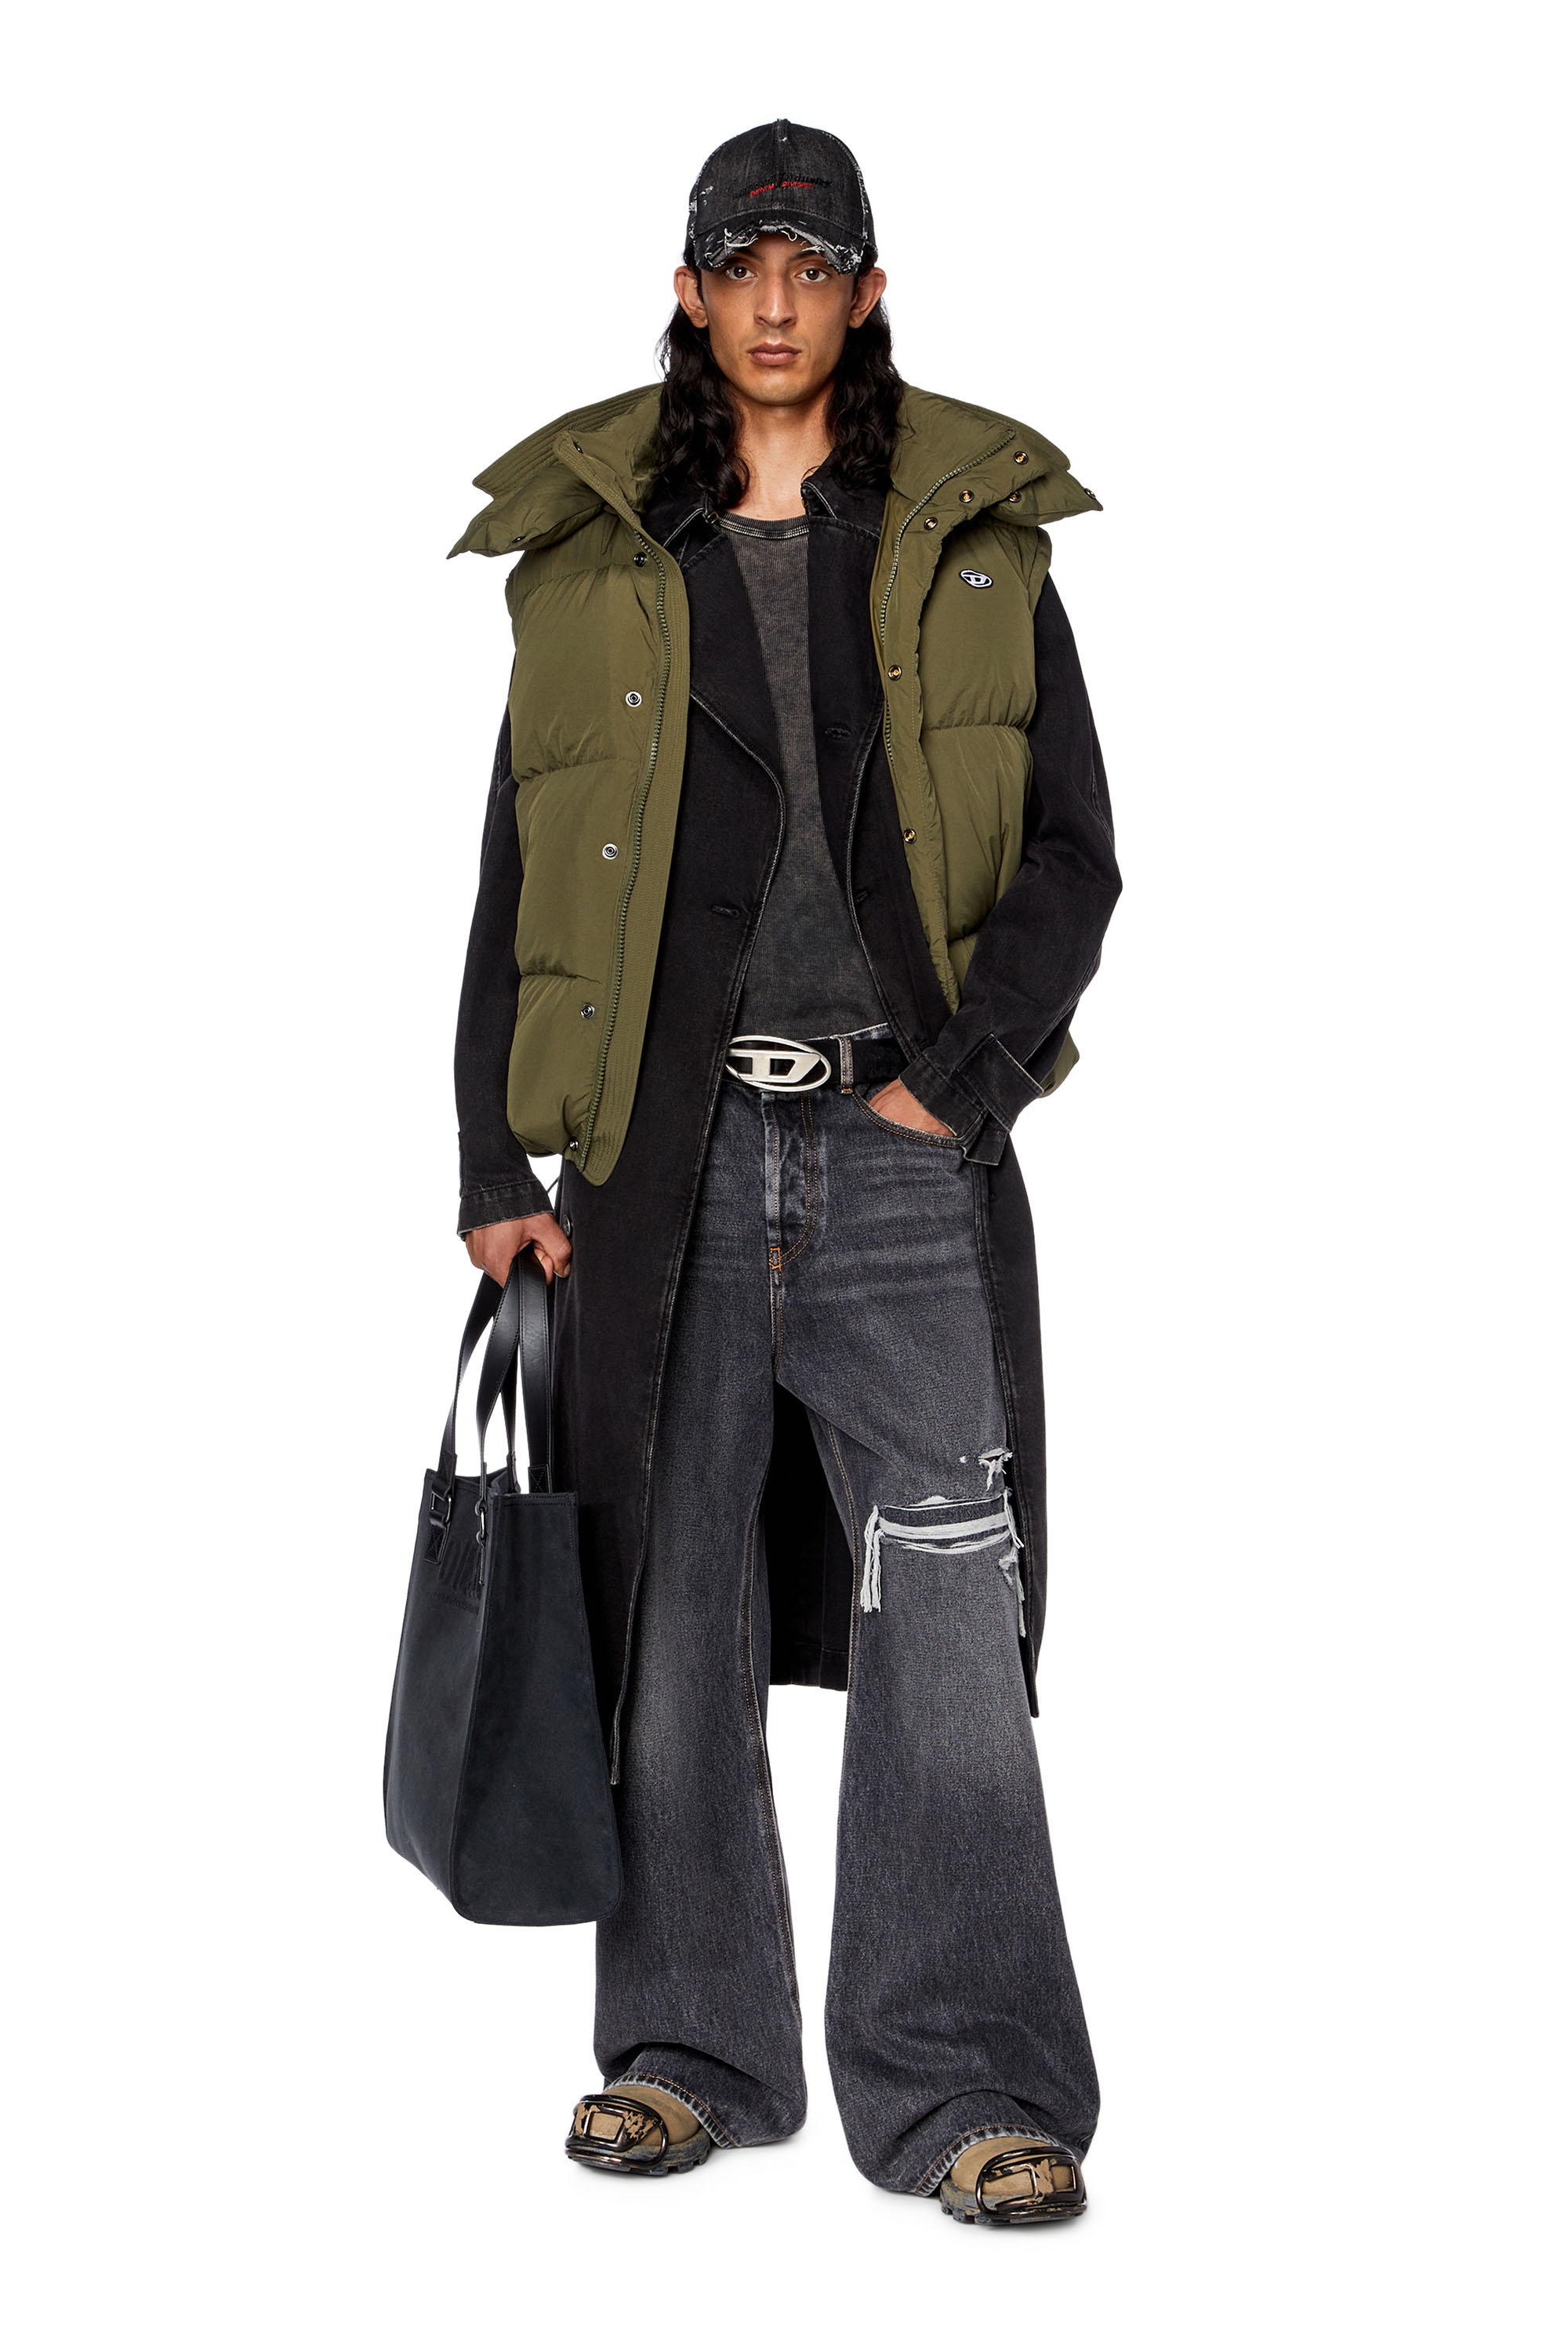 Vintage DIESEL Jacket / Rain Coat / Windbreaker Outwear / Activewear /  Jacket / Tracksuit / Track Top / Black Shell Hood / L / XL / Parka -   Canada